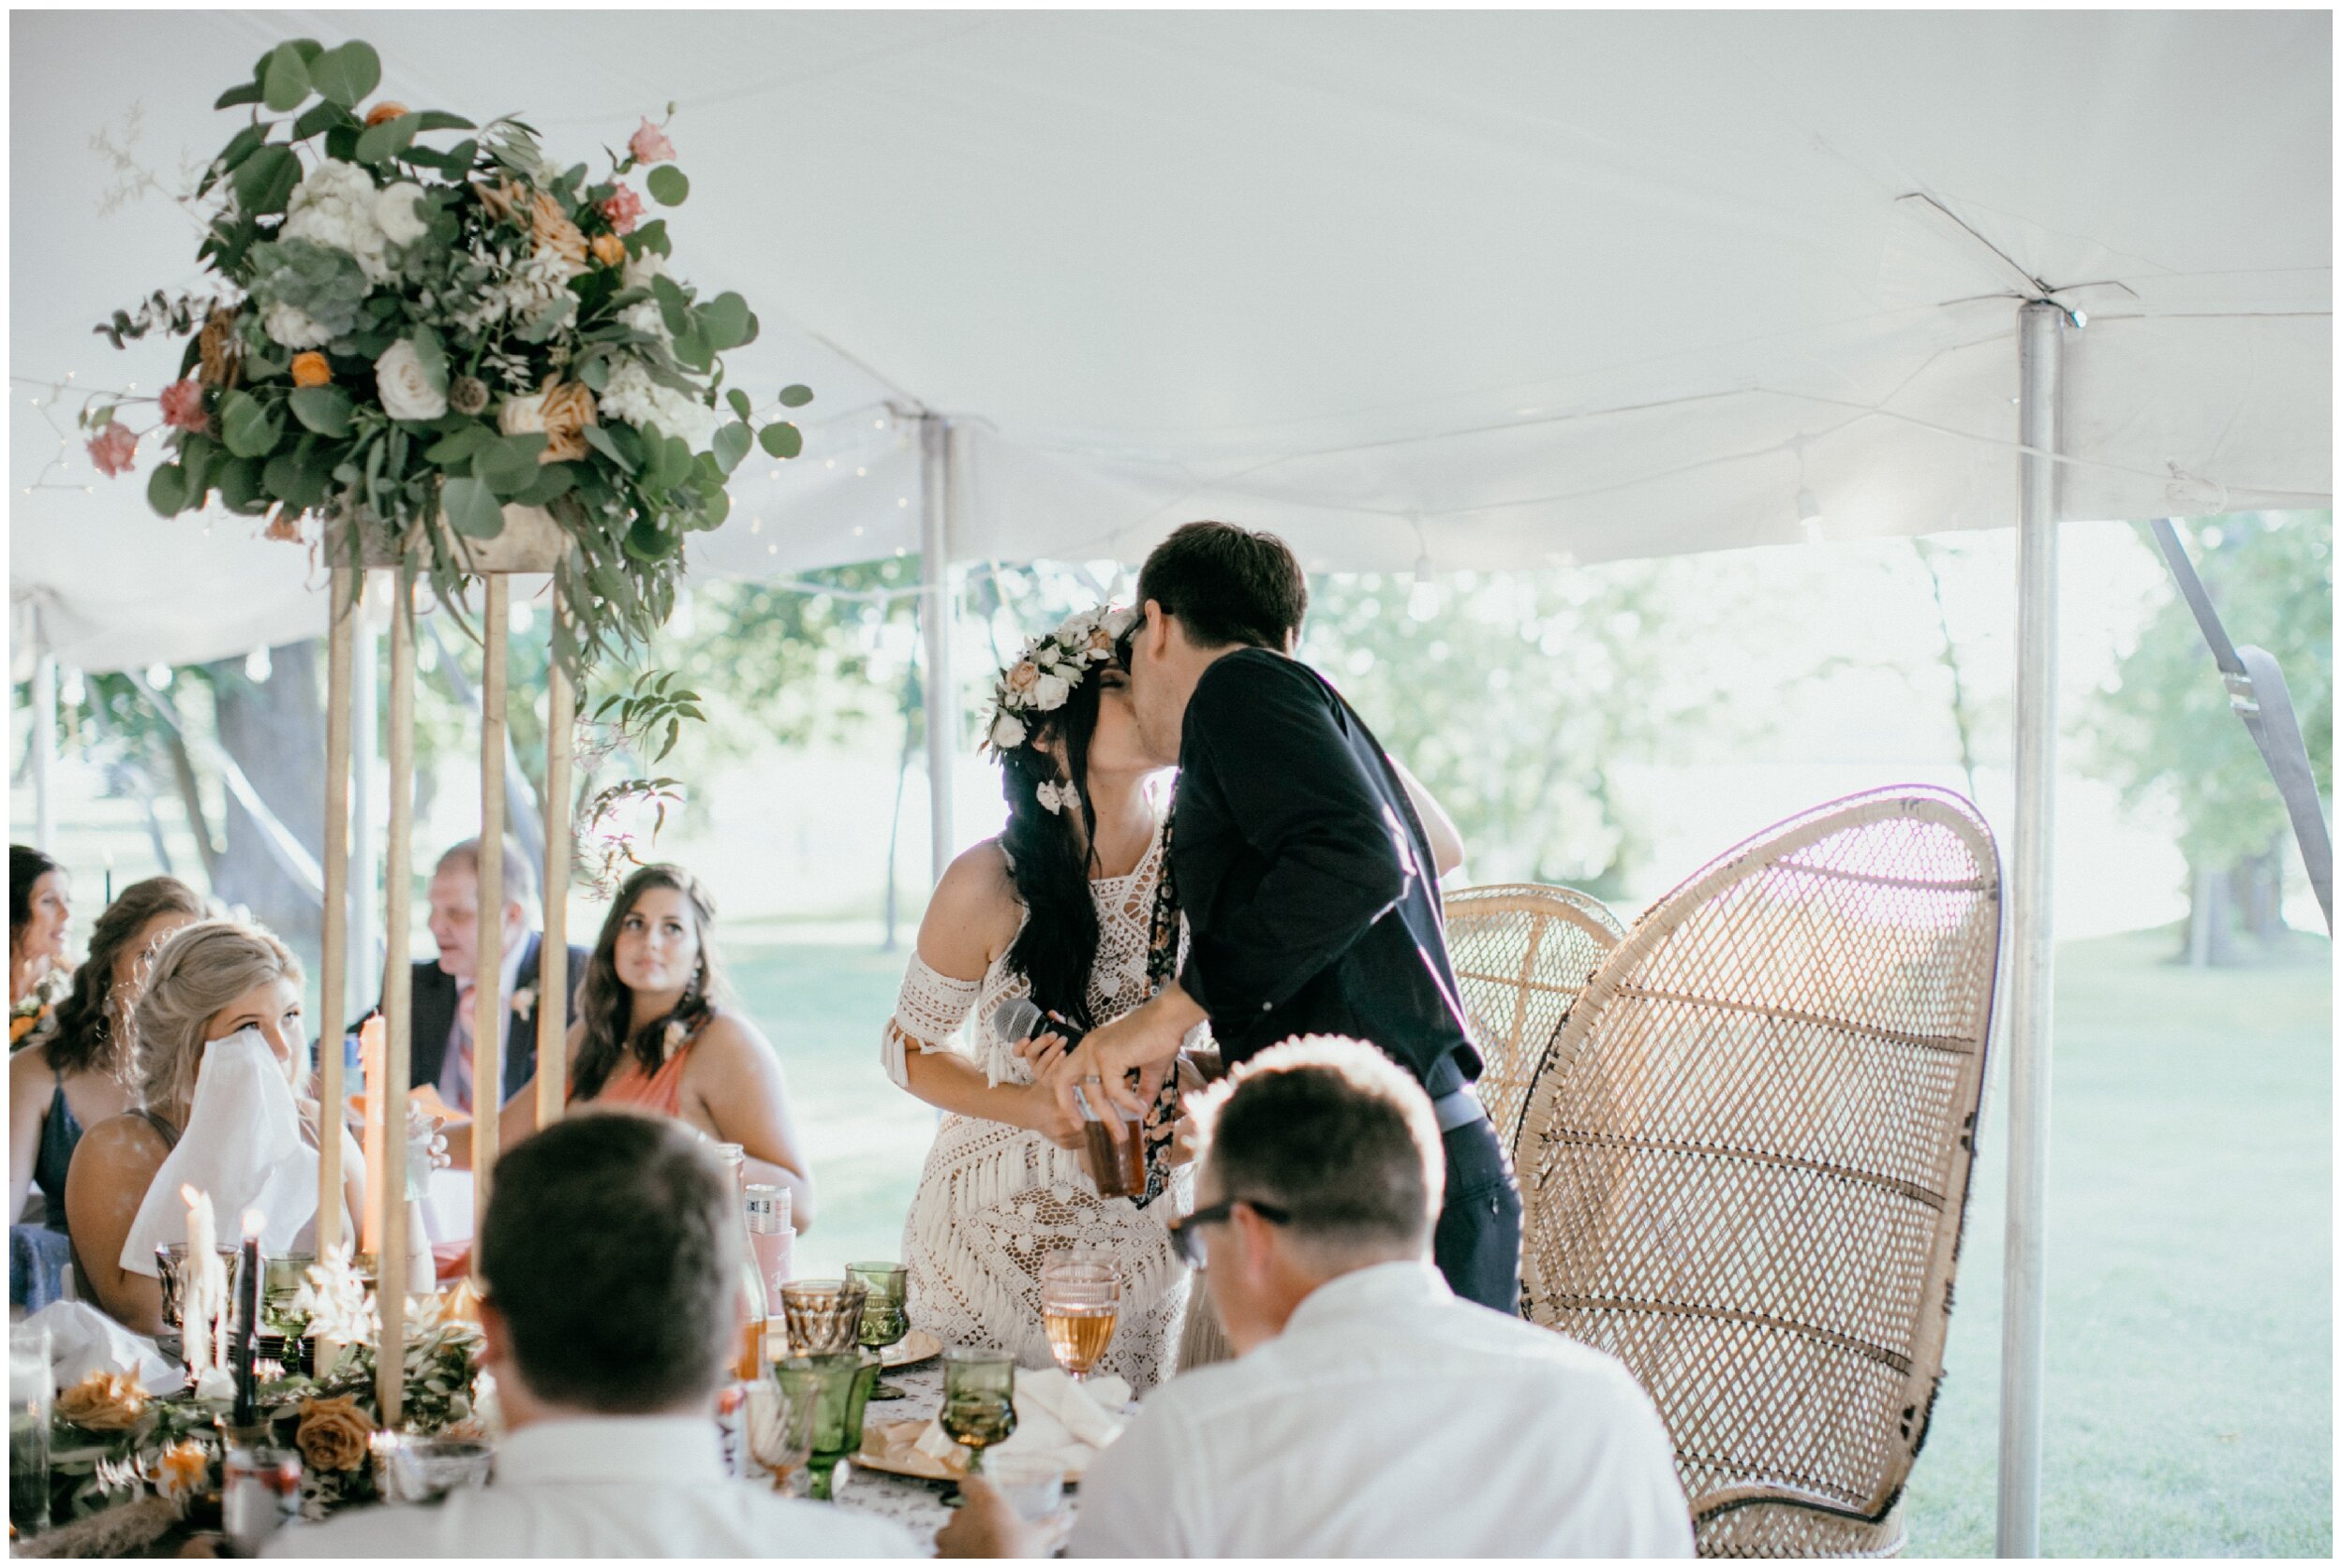 Bride and groom kissing at Minnesota backyard wedding reception